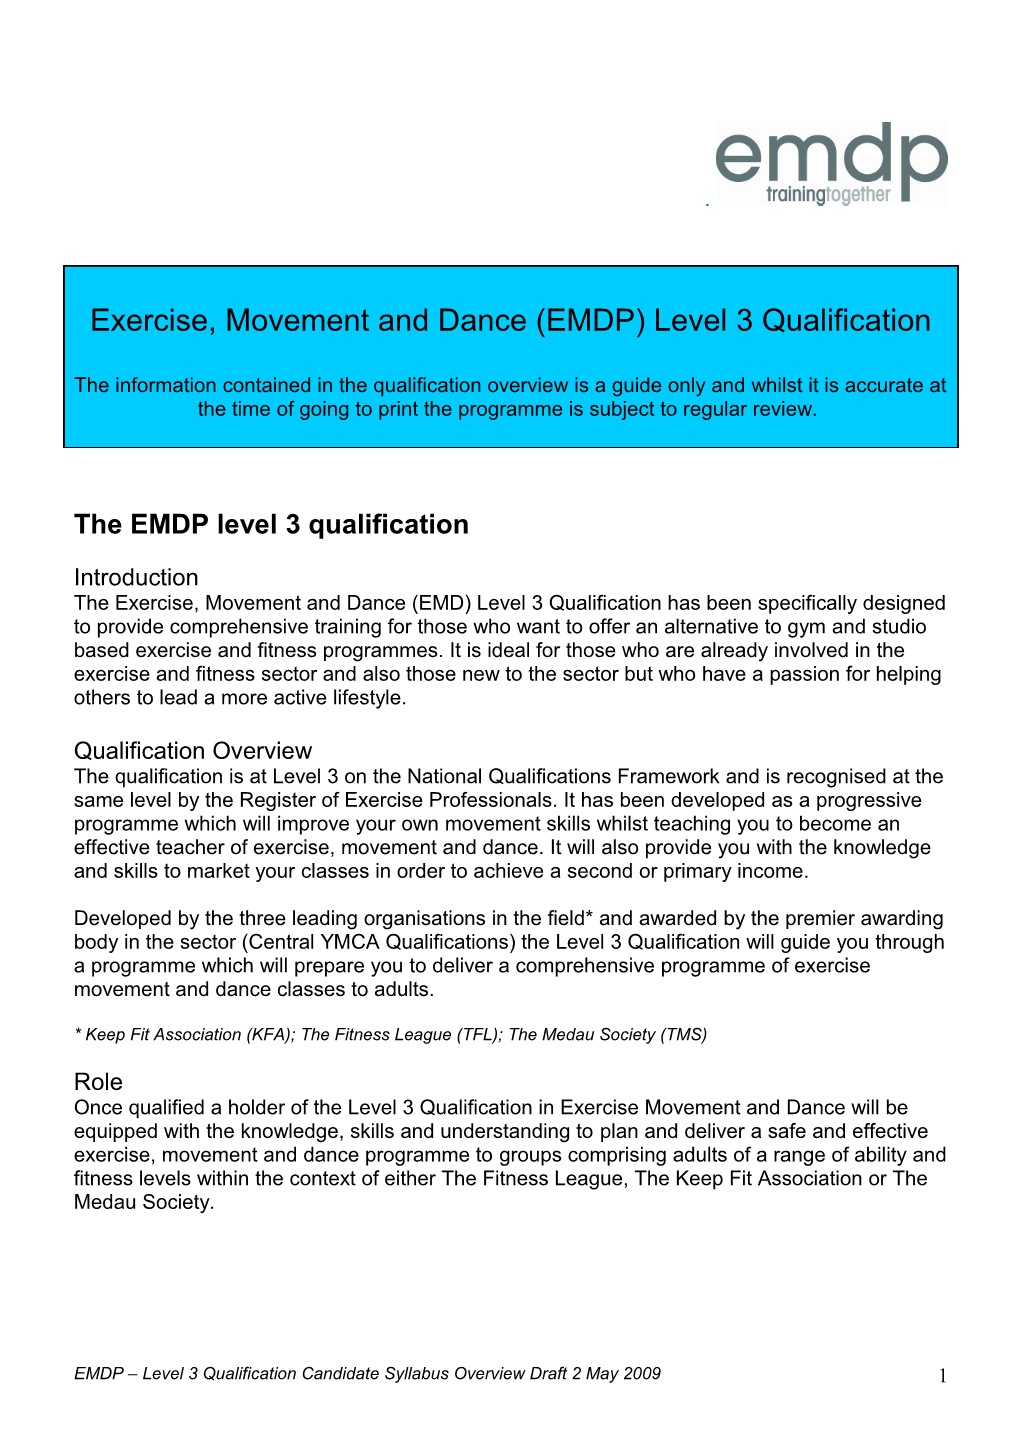 The EMDP Level 3 Qualification